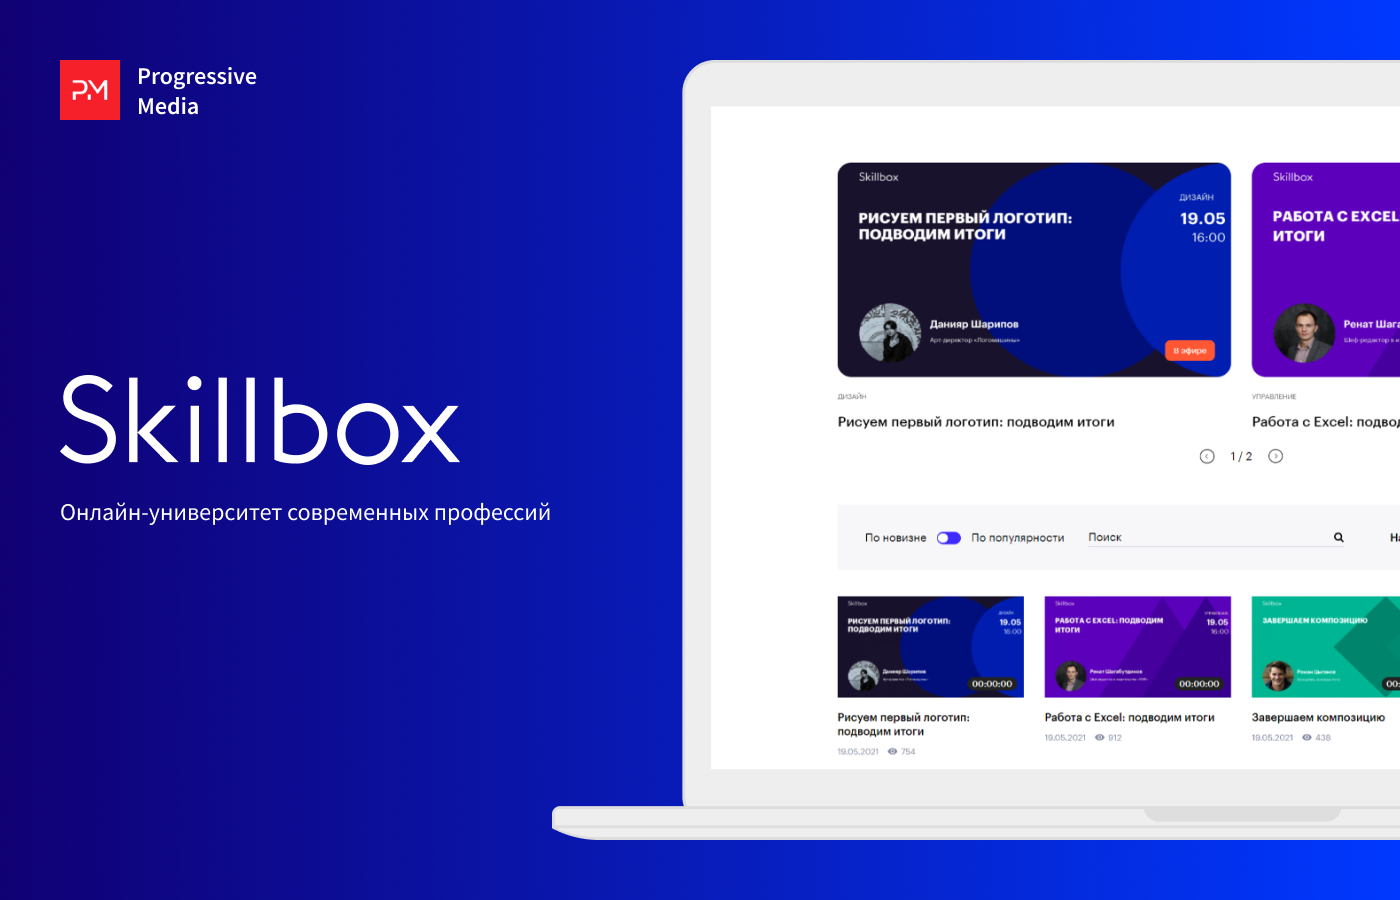 Skillbox - разработка сервиса для проведения вебинаров